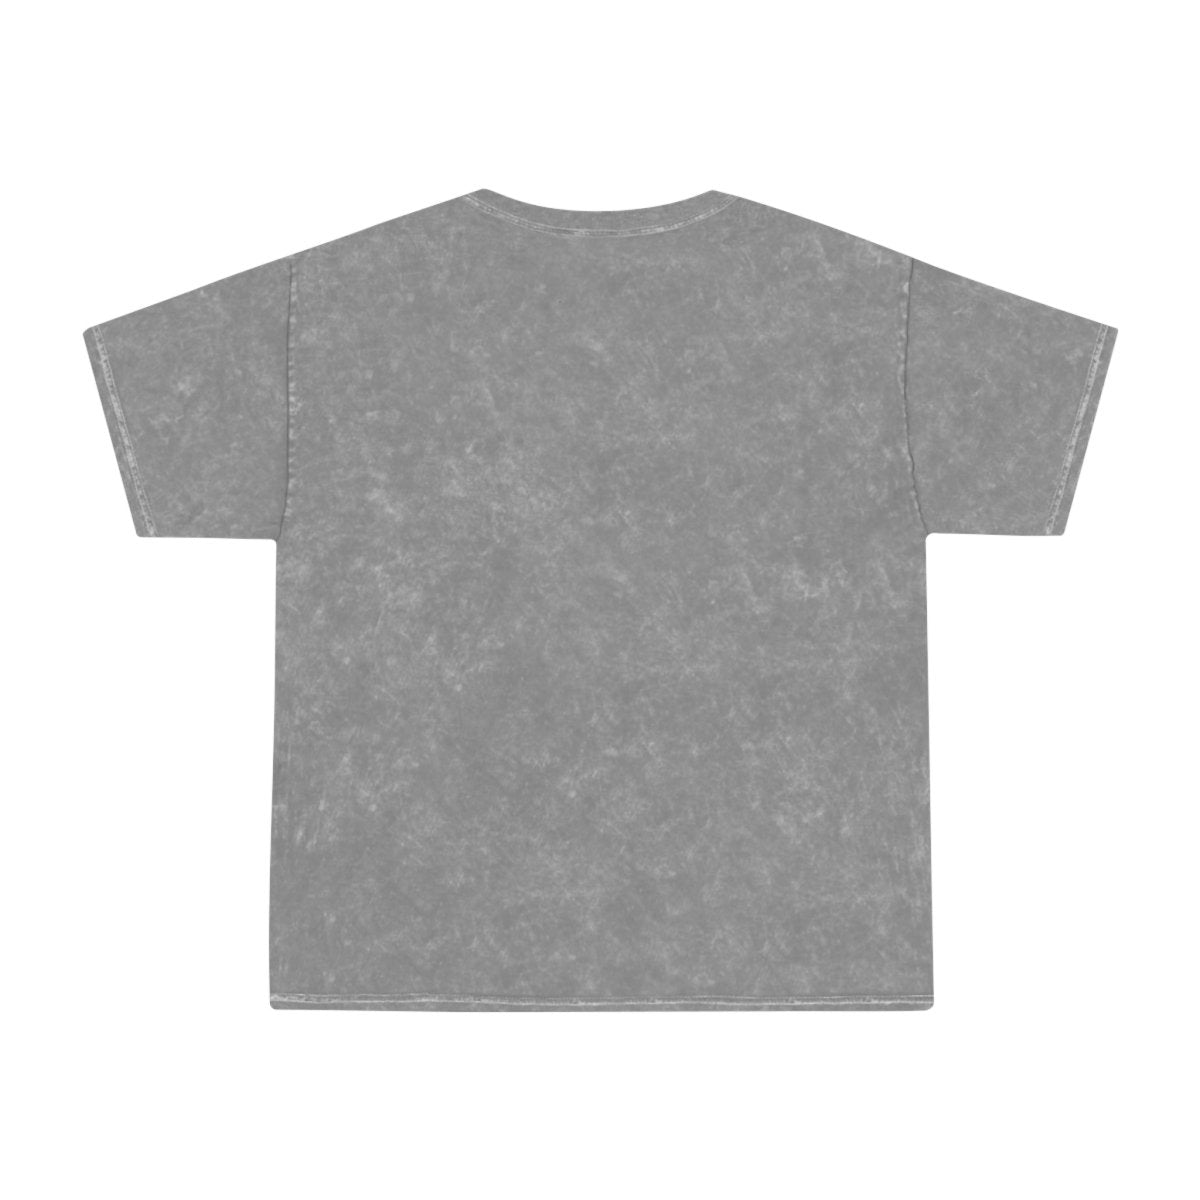 Royal Dog Mineral Wash T-Shirt - Style B - DarzyStore